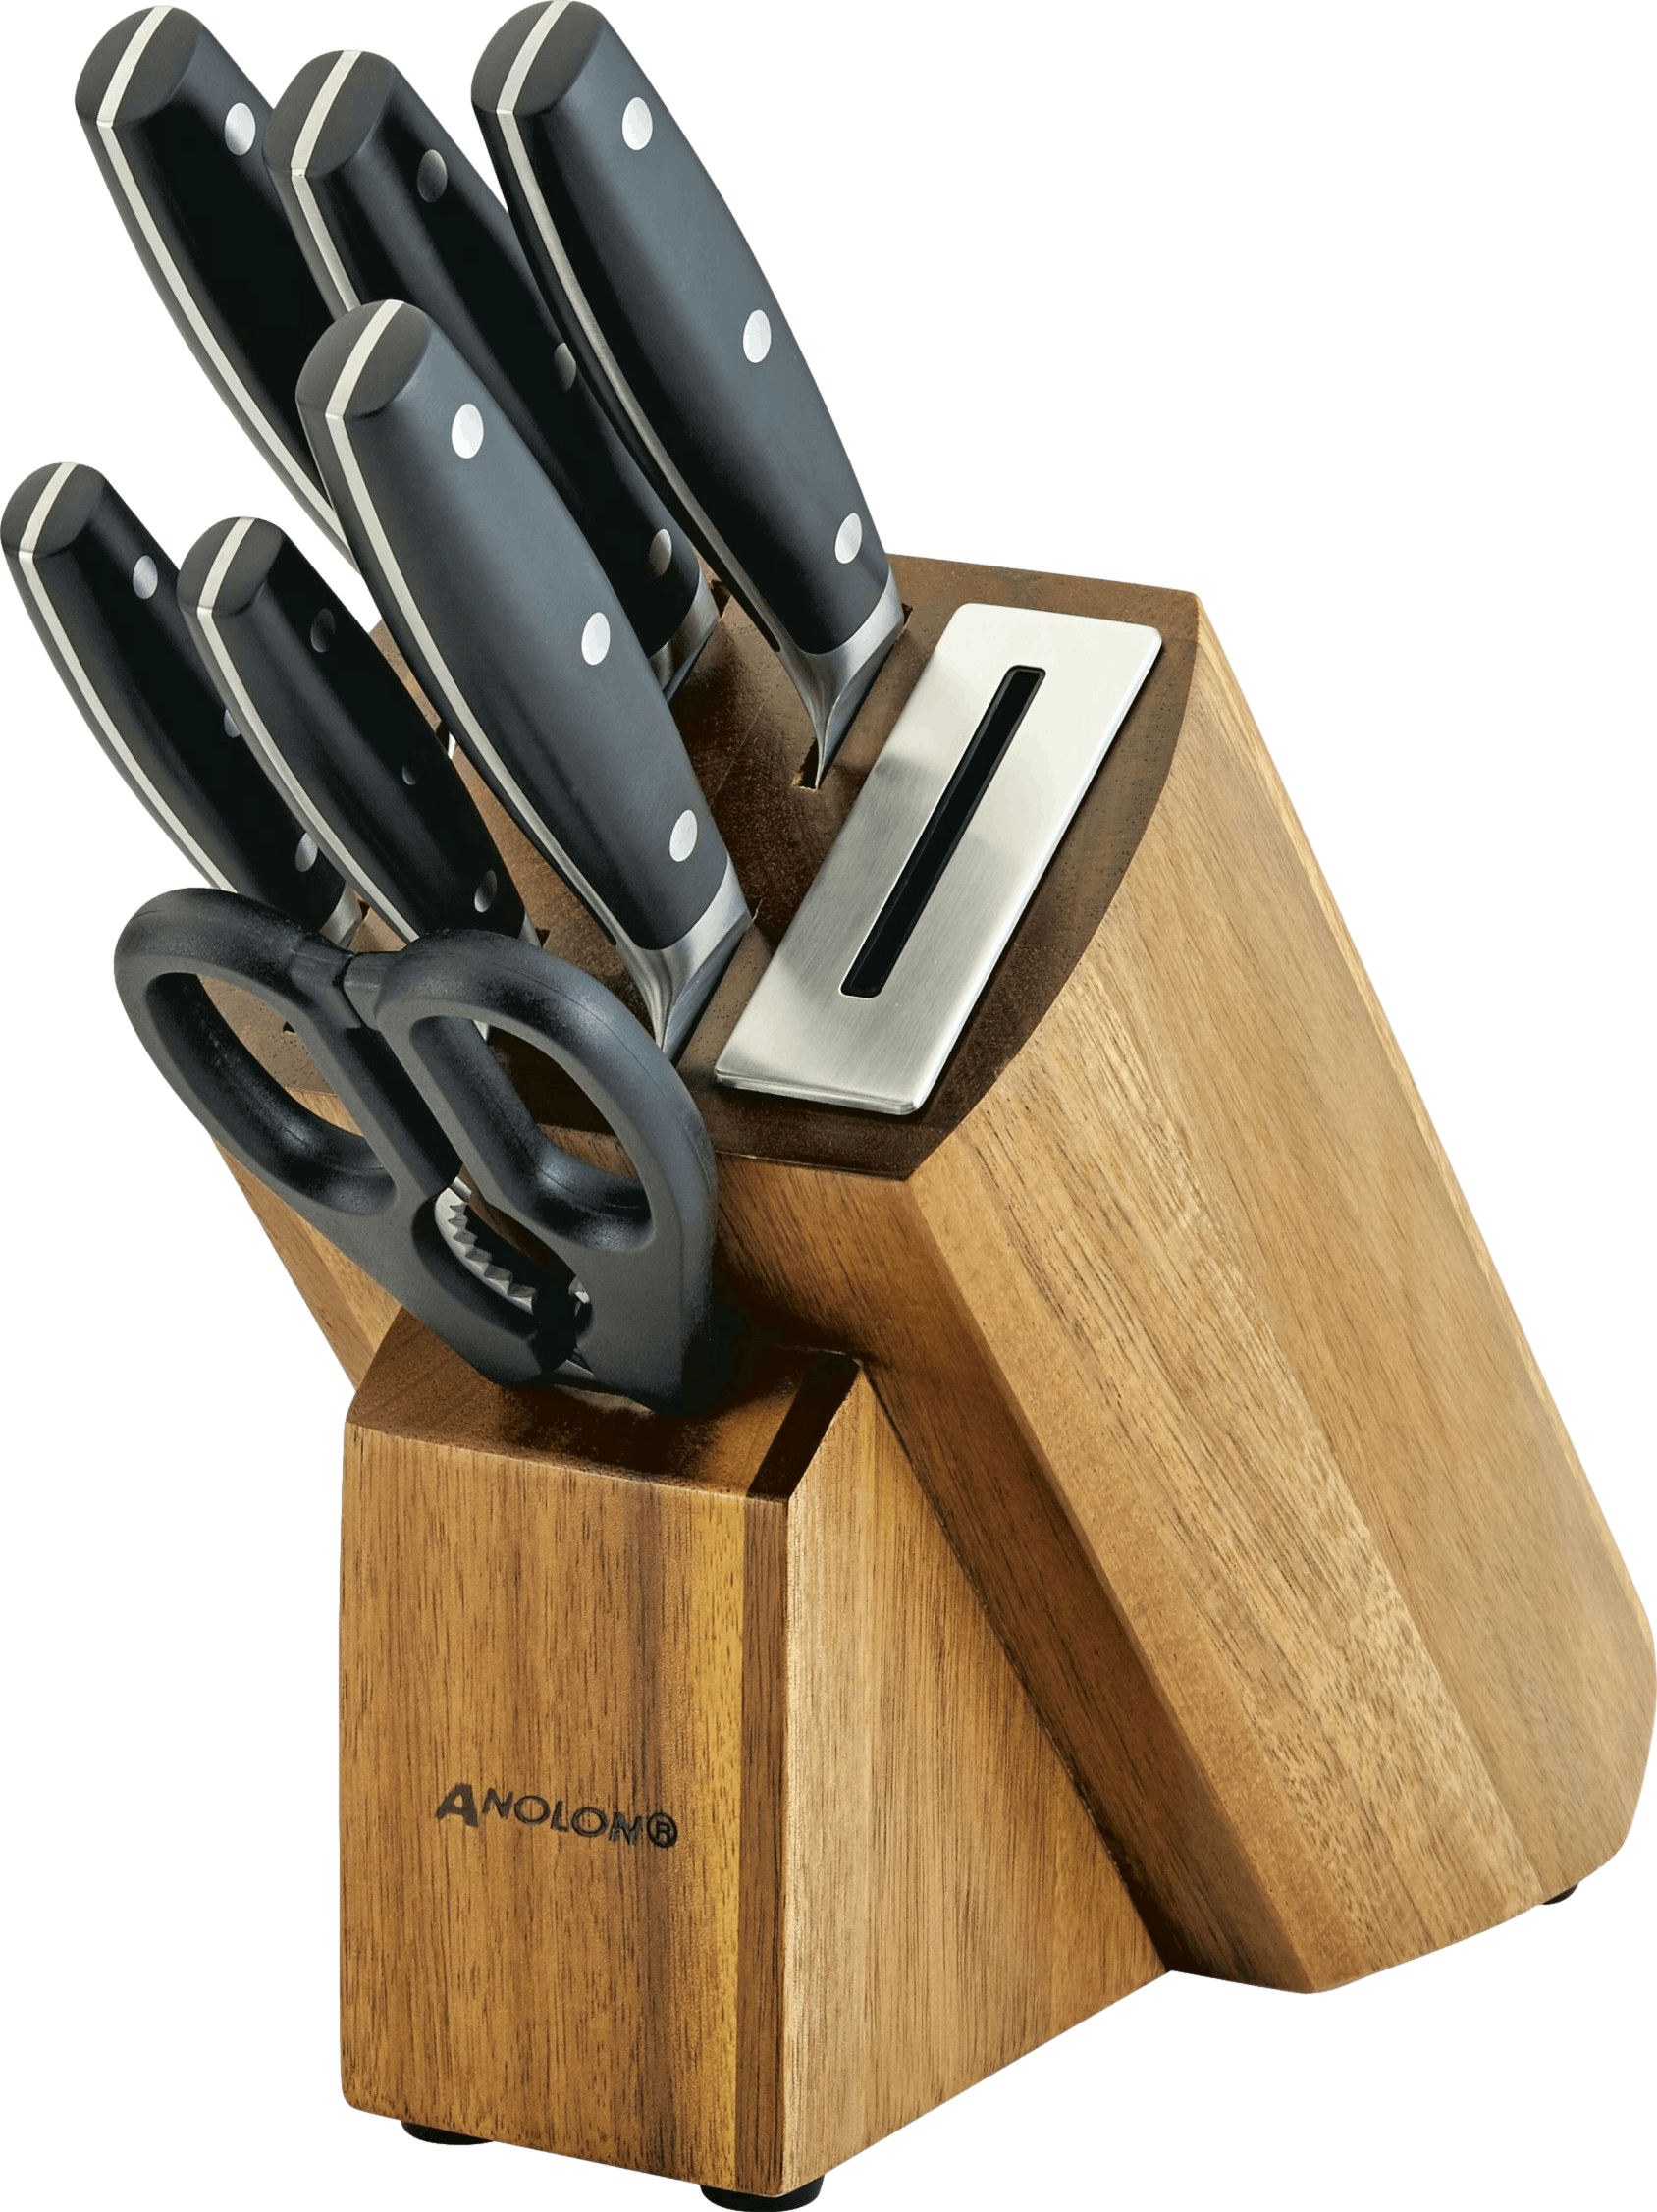 Anolon AlwaysSharp Japanese Steel Knife Block Set with Built-In Sharpener, 8-Piece